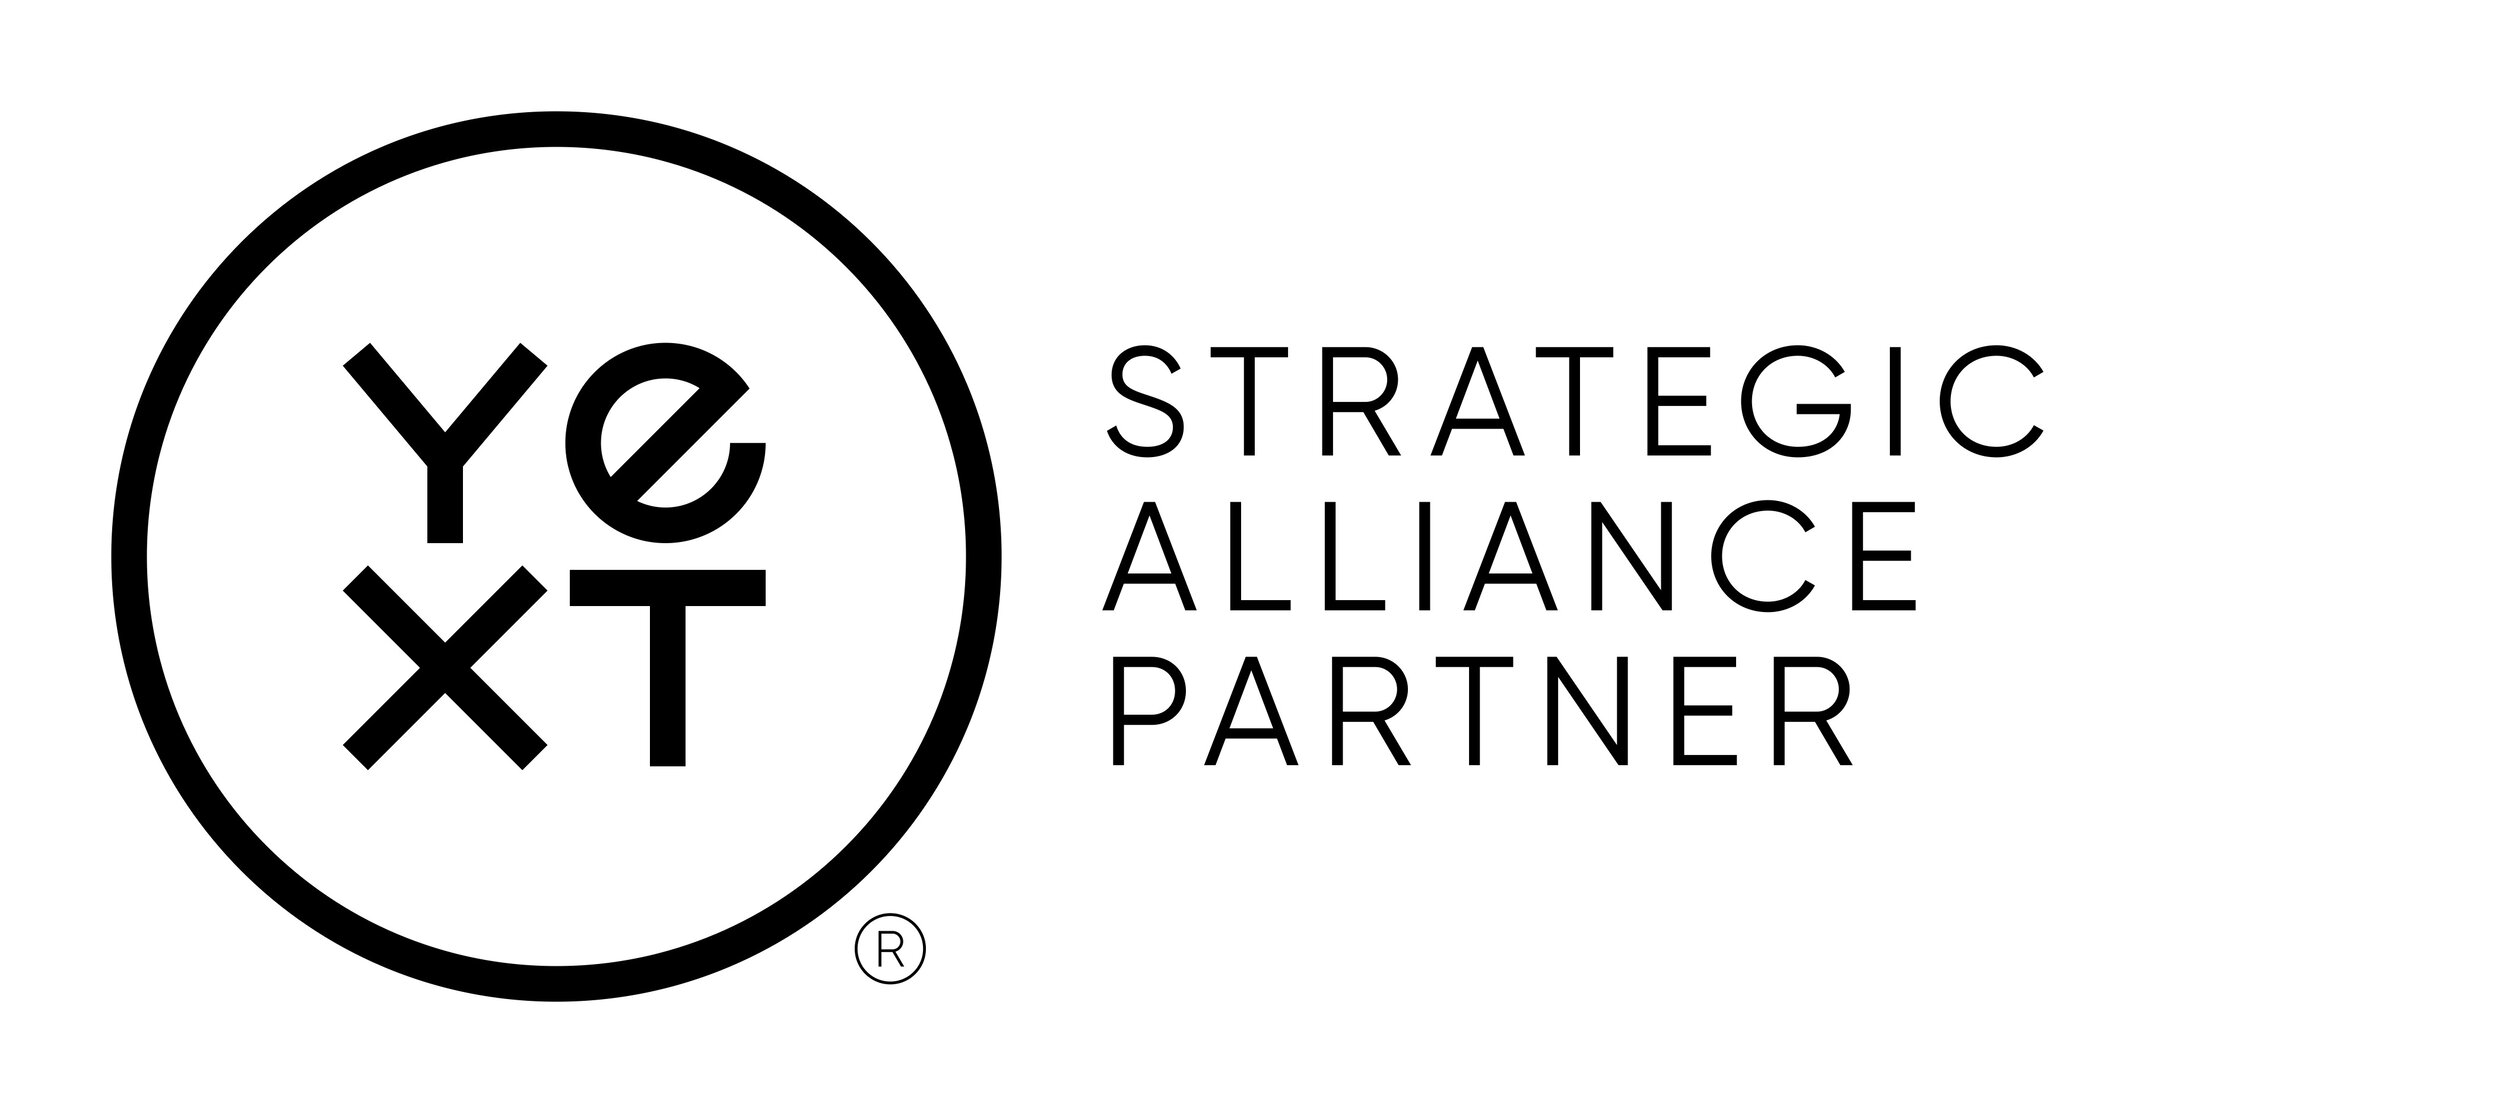 Yext_Strategic_Alliance_Partner_Black (1).jpg